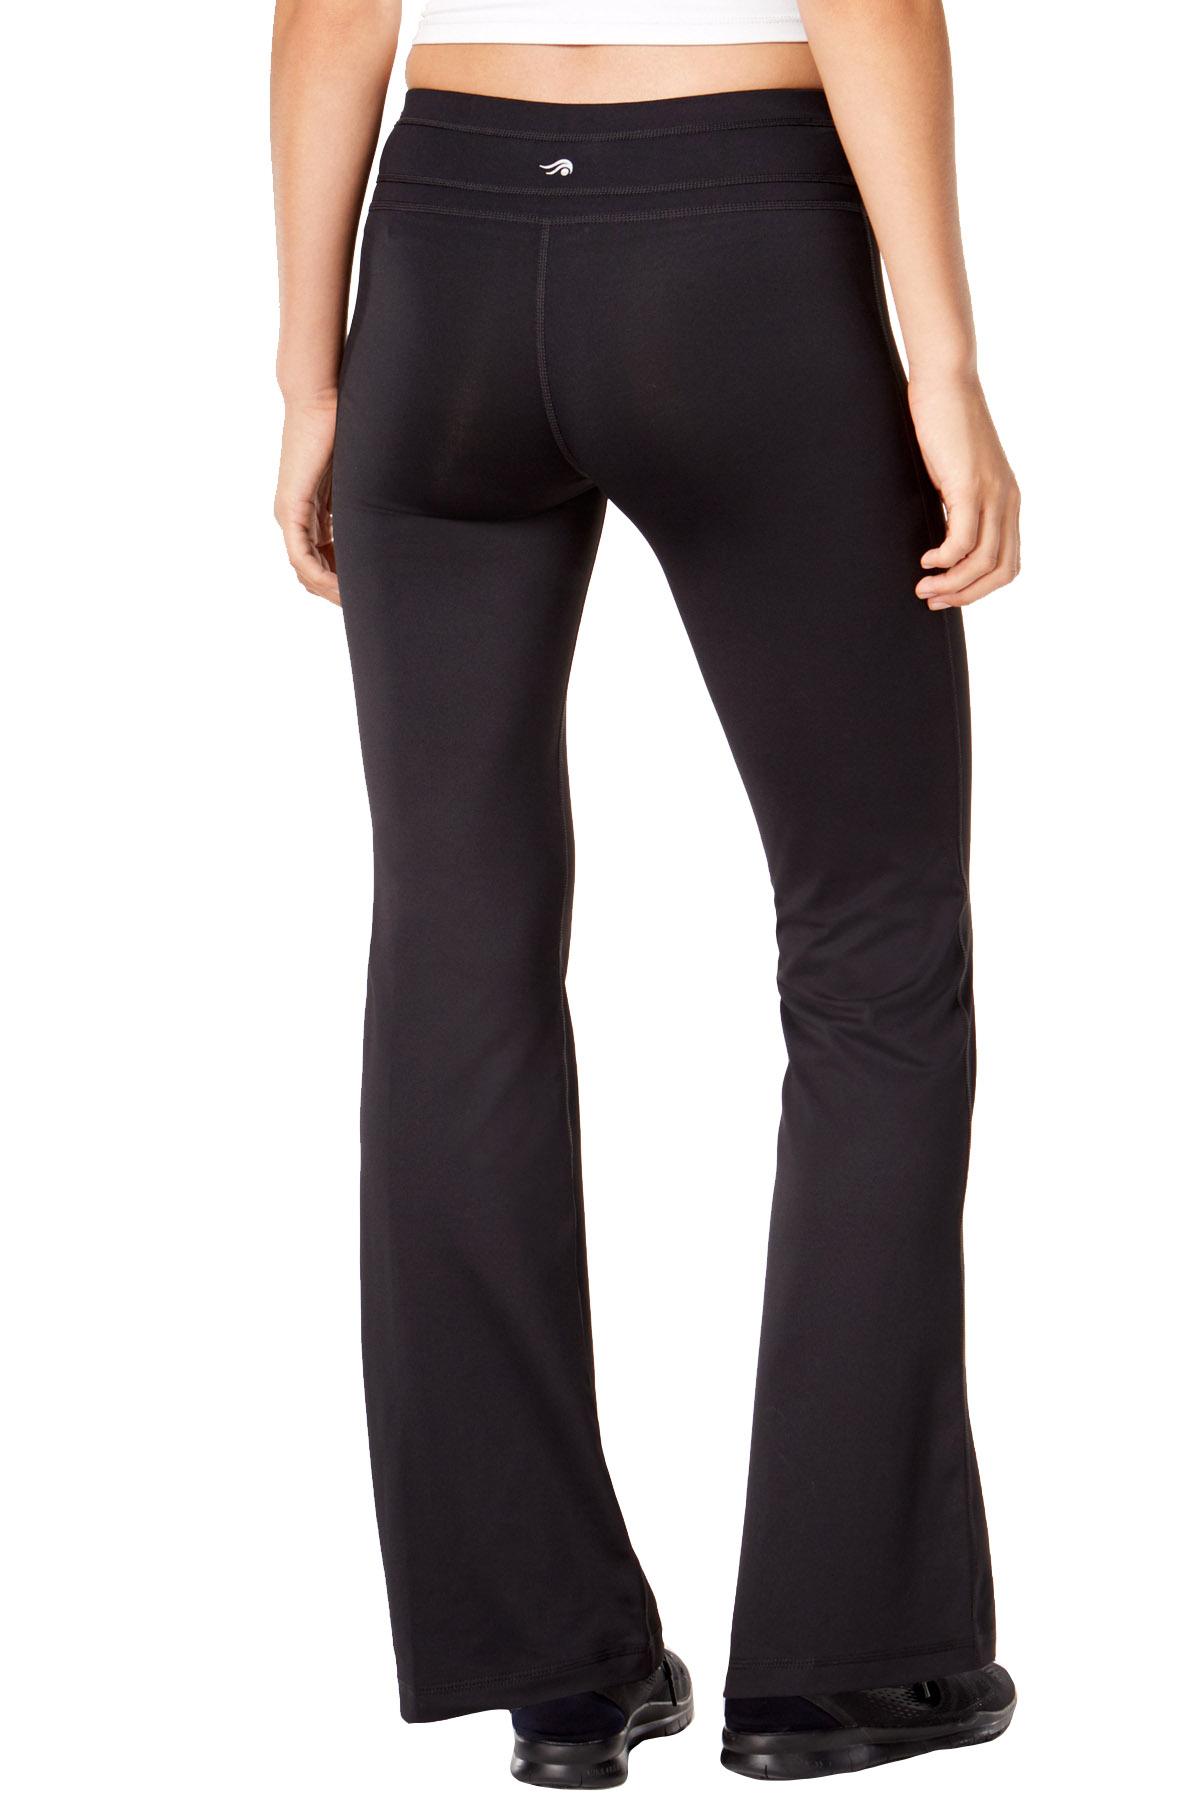 Betabrand Straight-Leg, Classic Dress Pant Yoga Pant Medium Short Petite  BLack